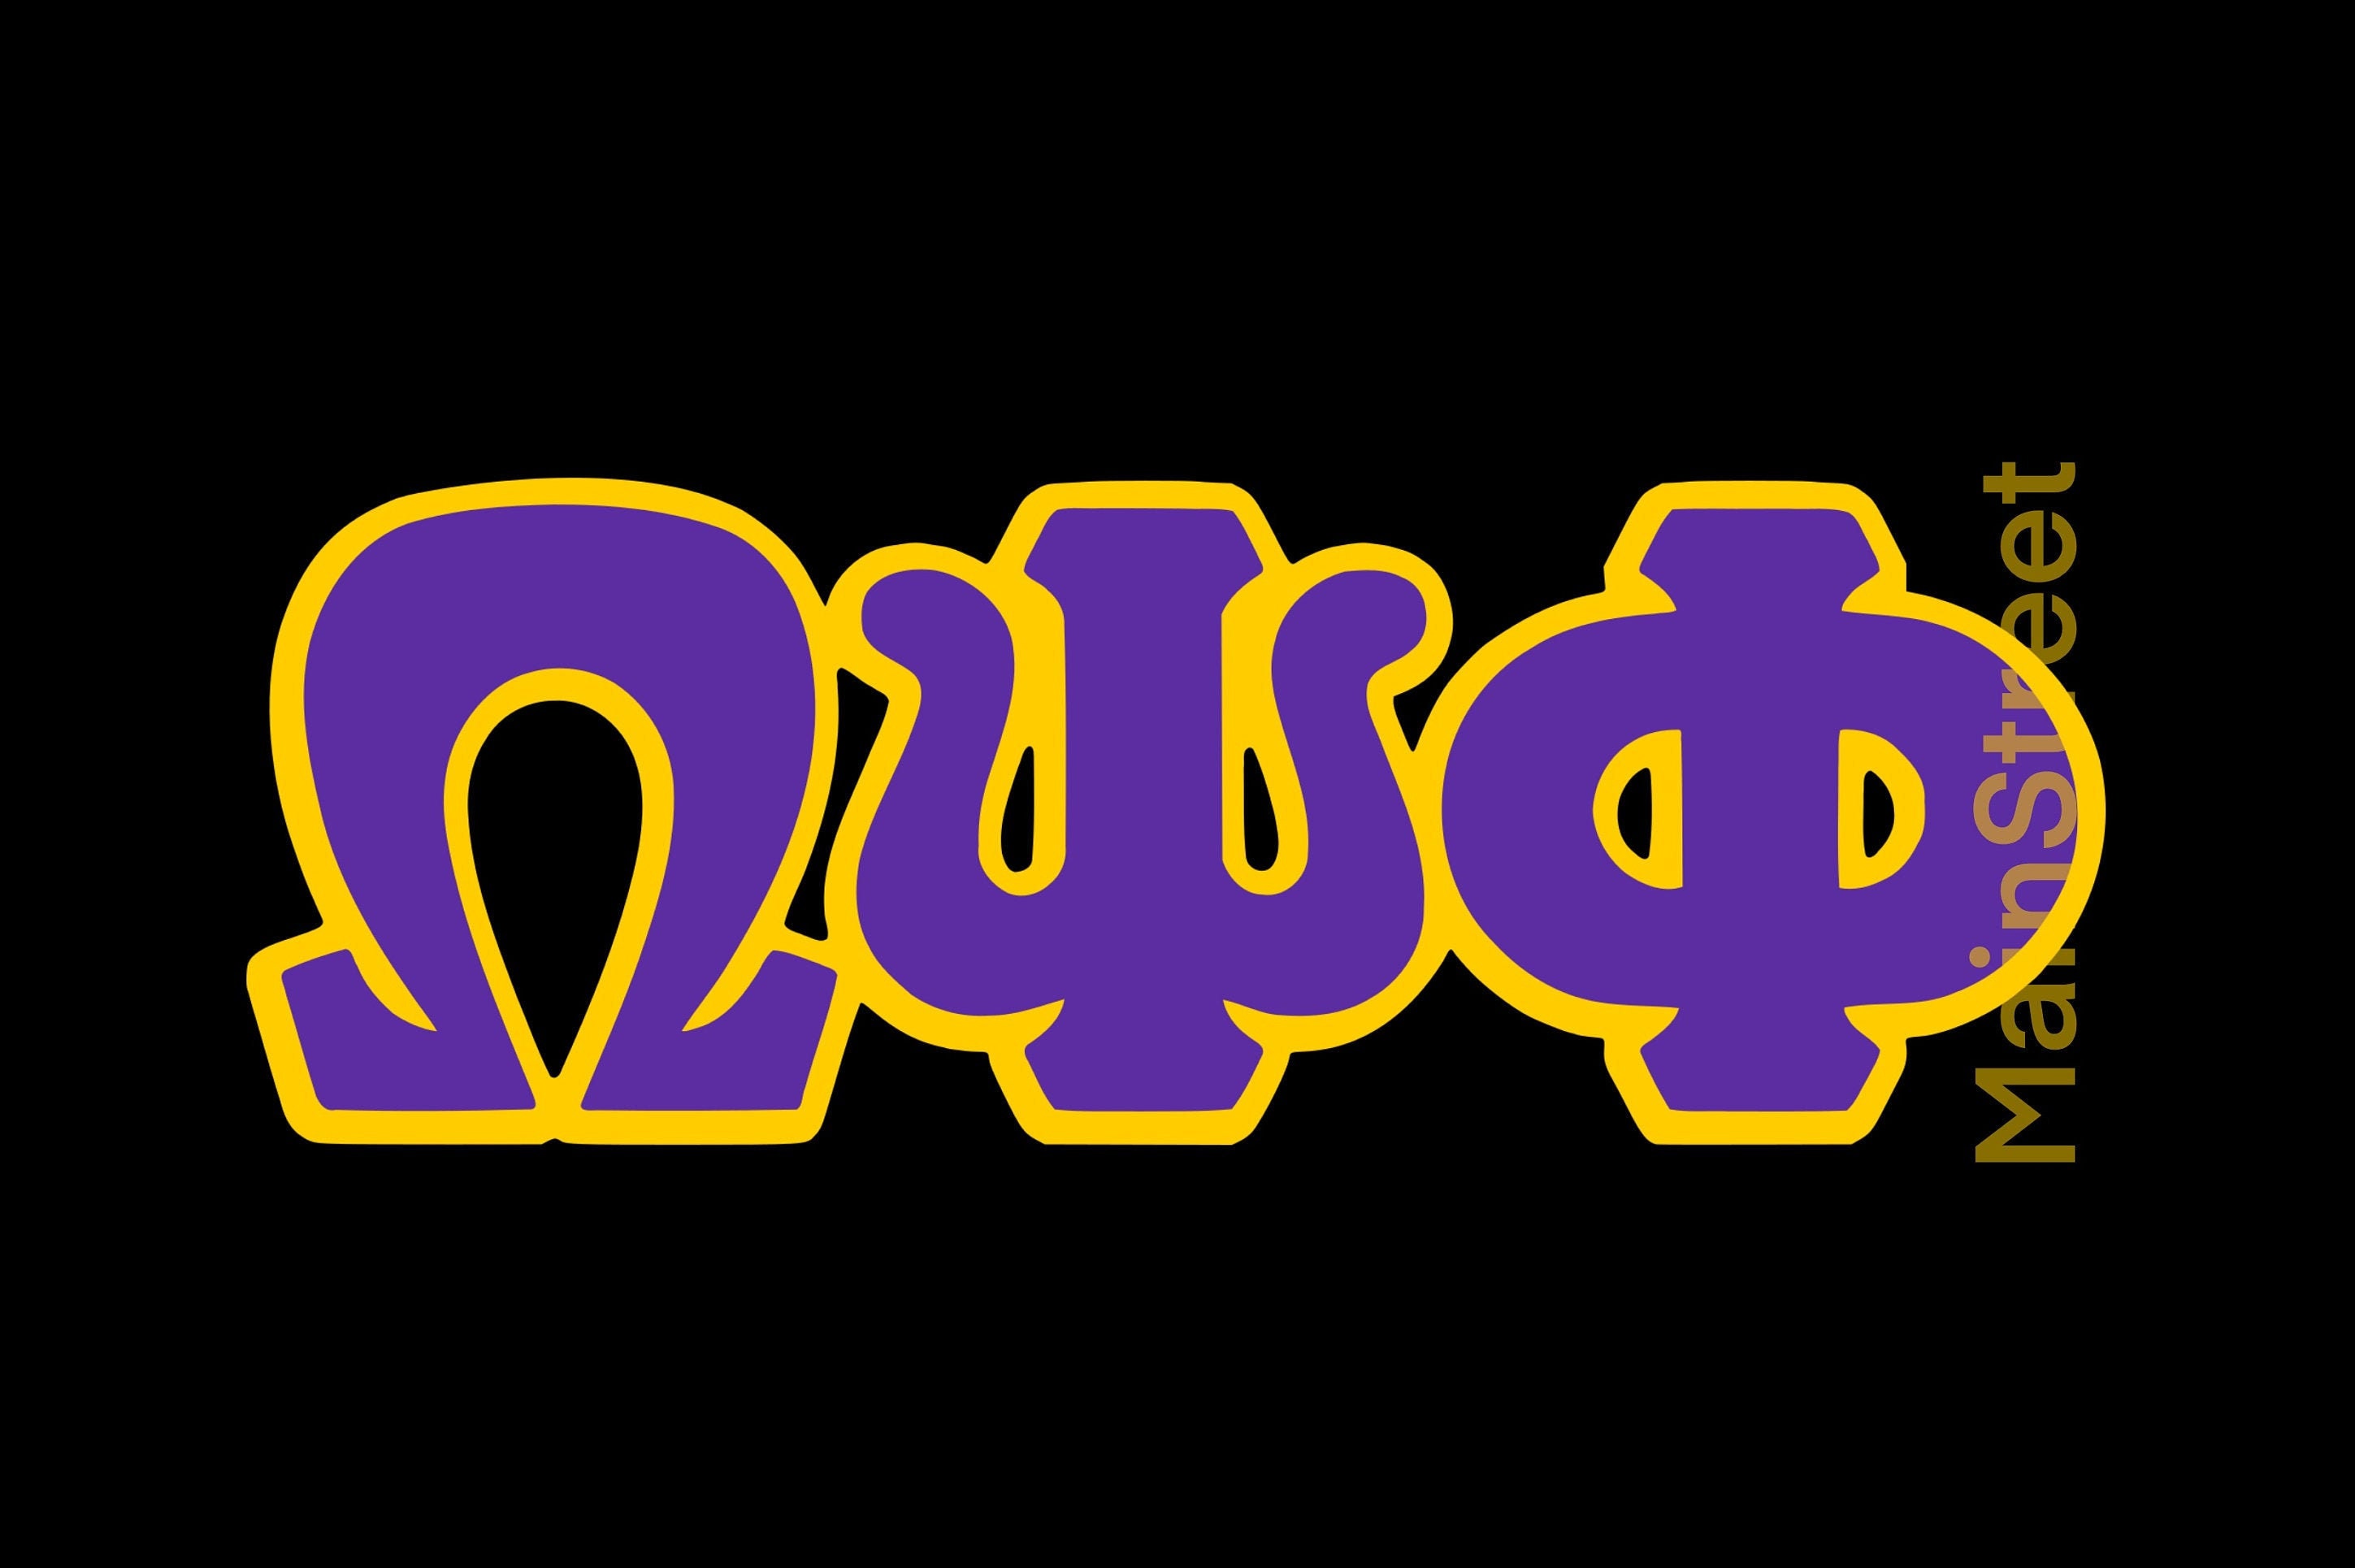 Omega psi phi fraternity logo png - loversukraine